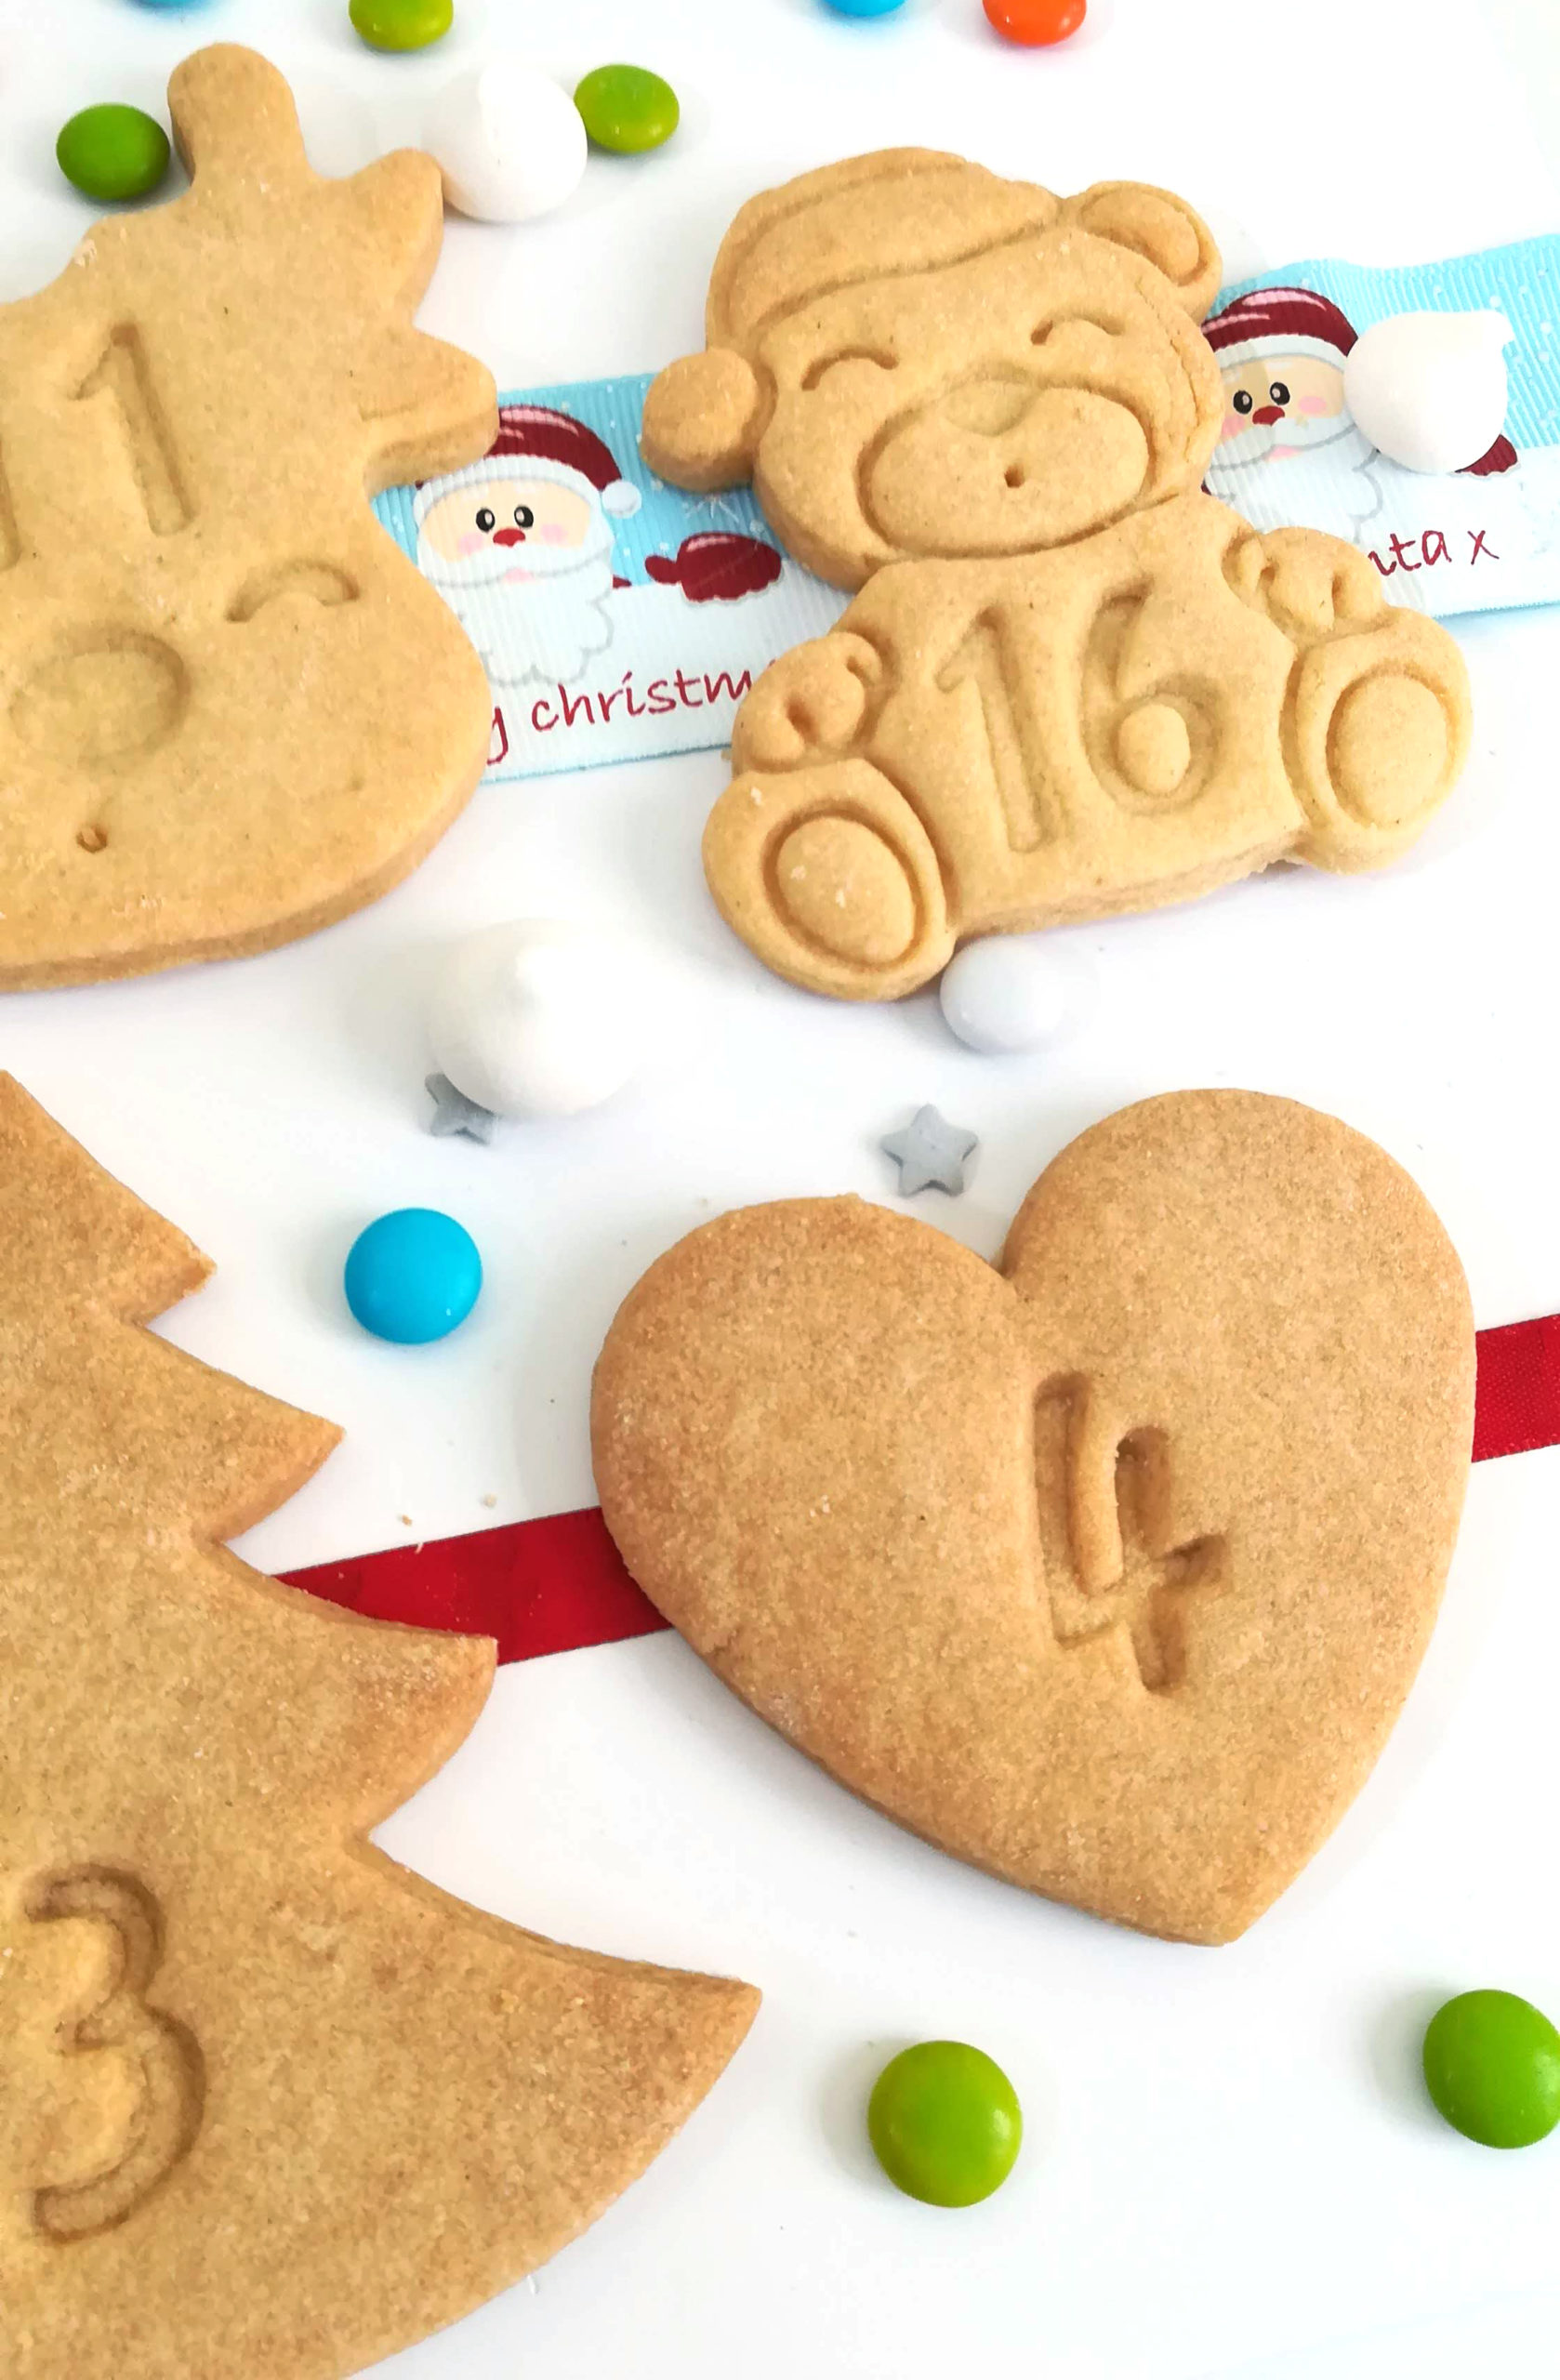 Calendrier de l'avent 2020 : mes biscuits célébrent les traditions de